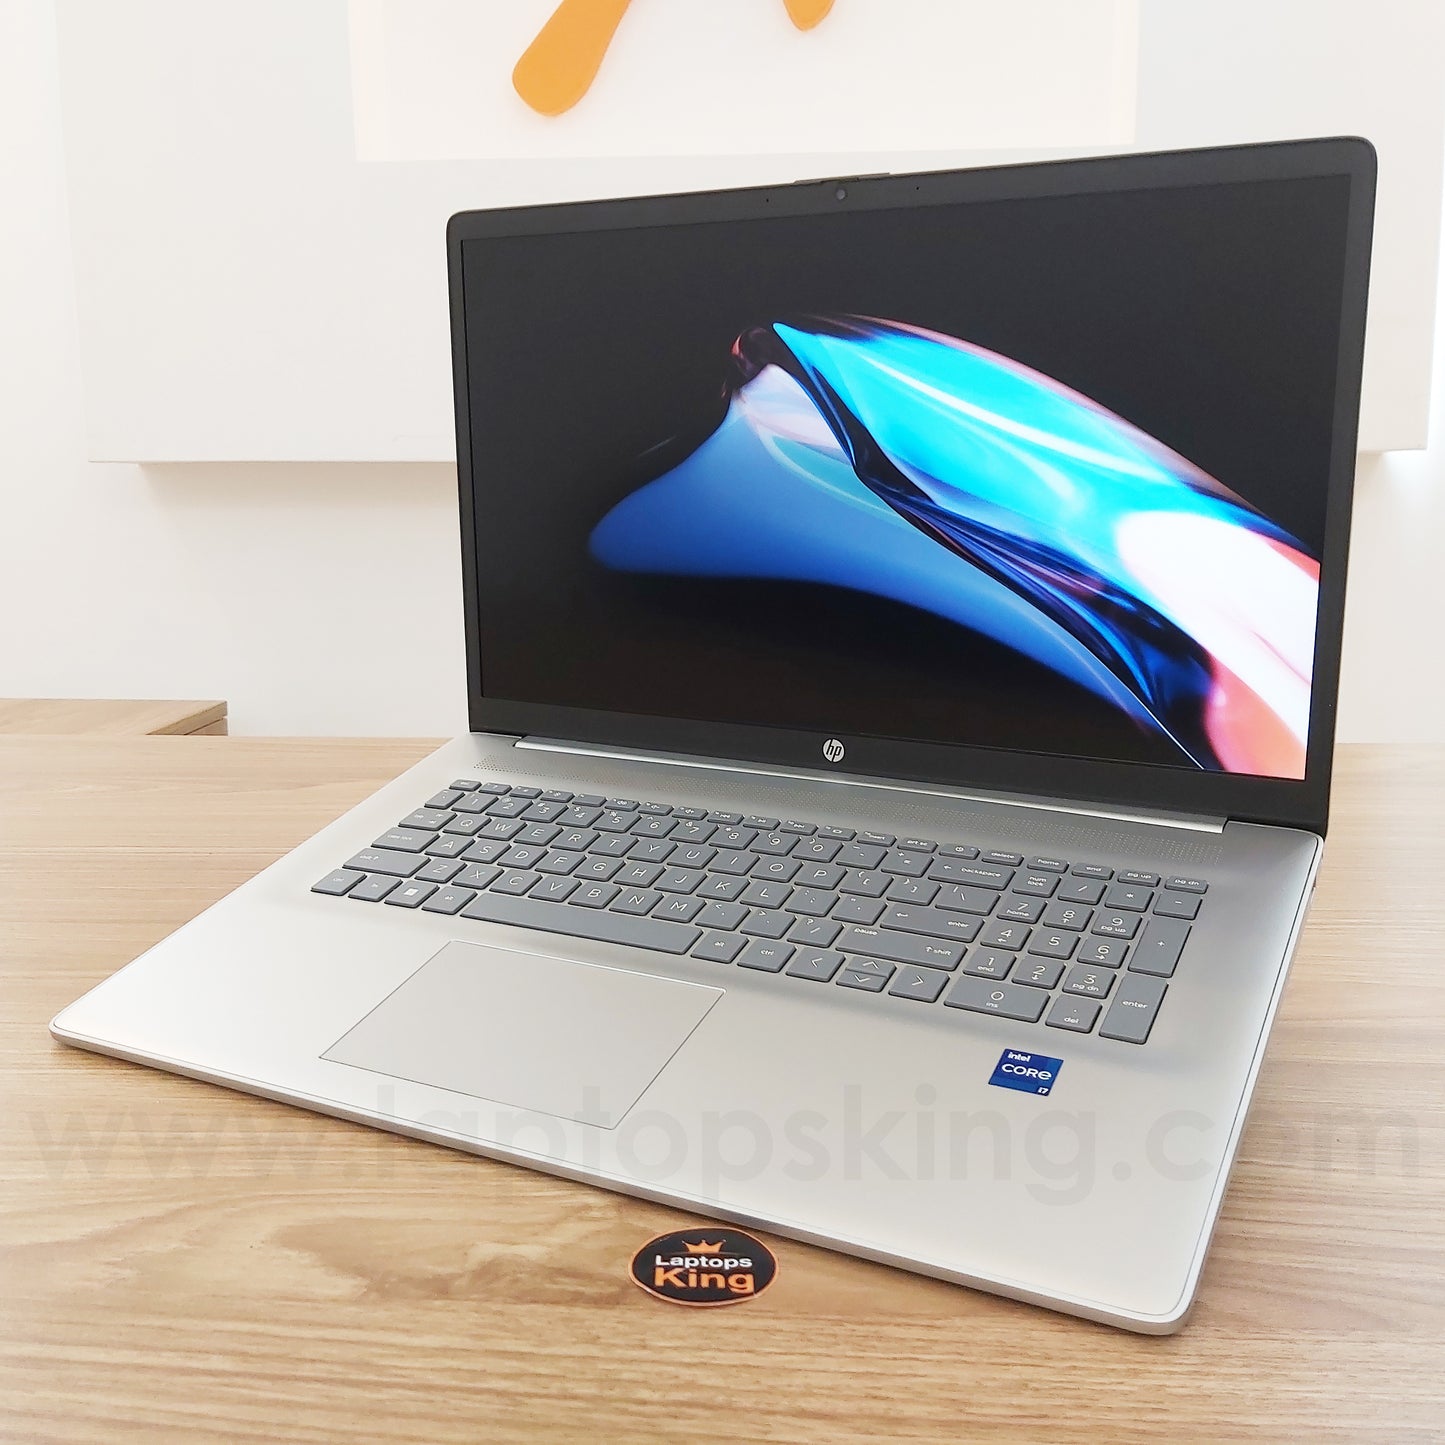 Hp 17-CN3097 Core i7-1355u Iris Xe 17.3" Laptop Offers (New OB)